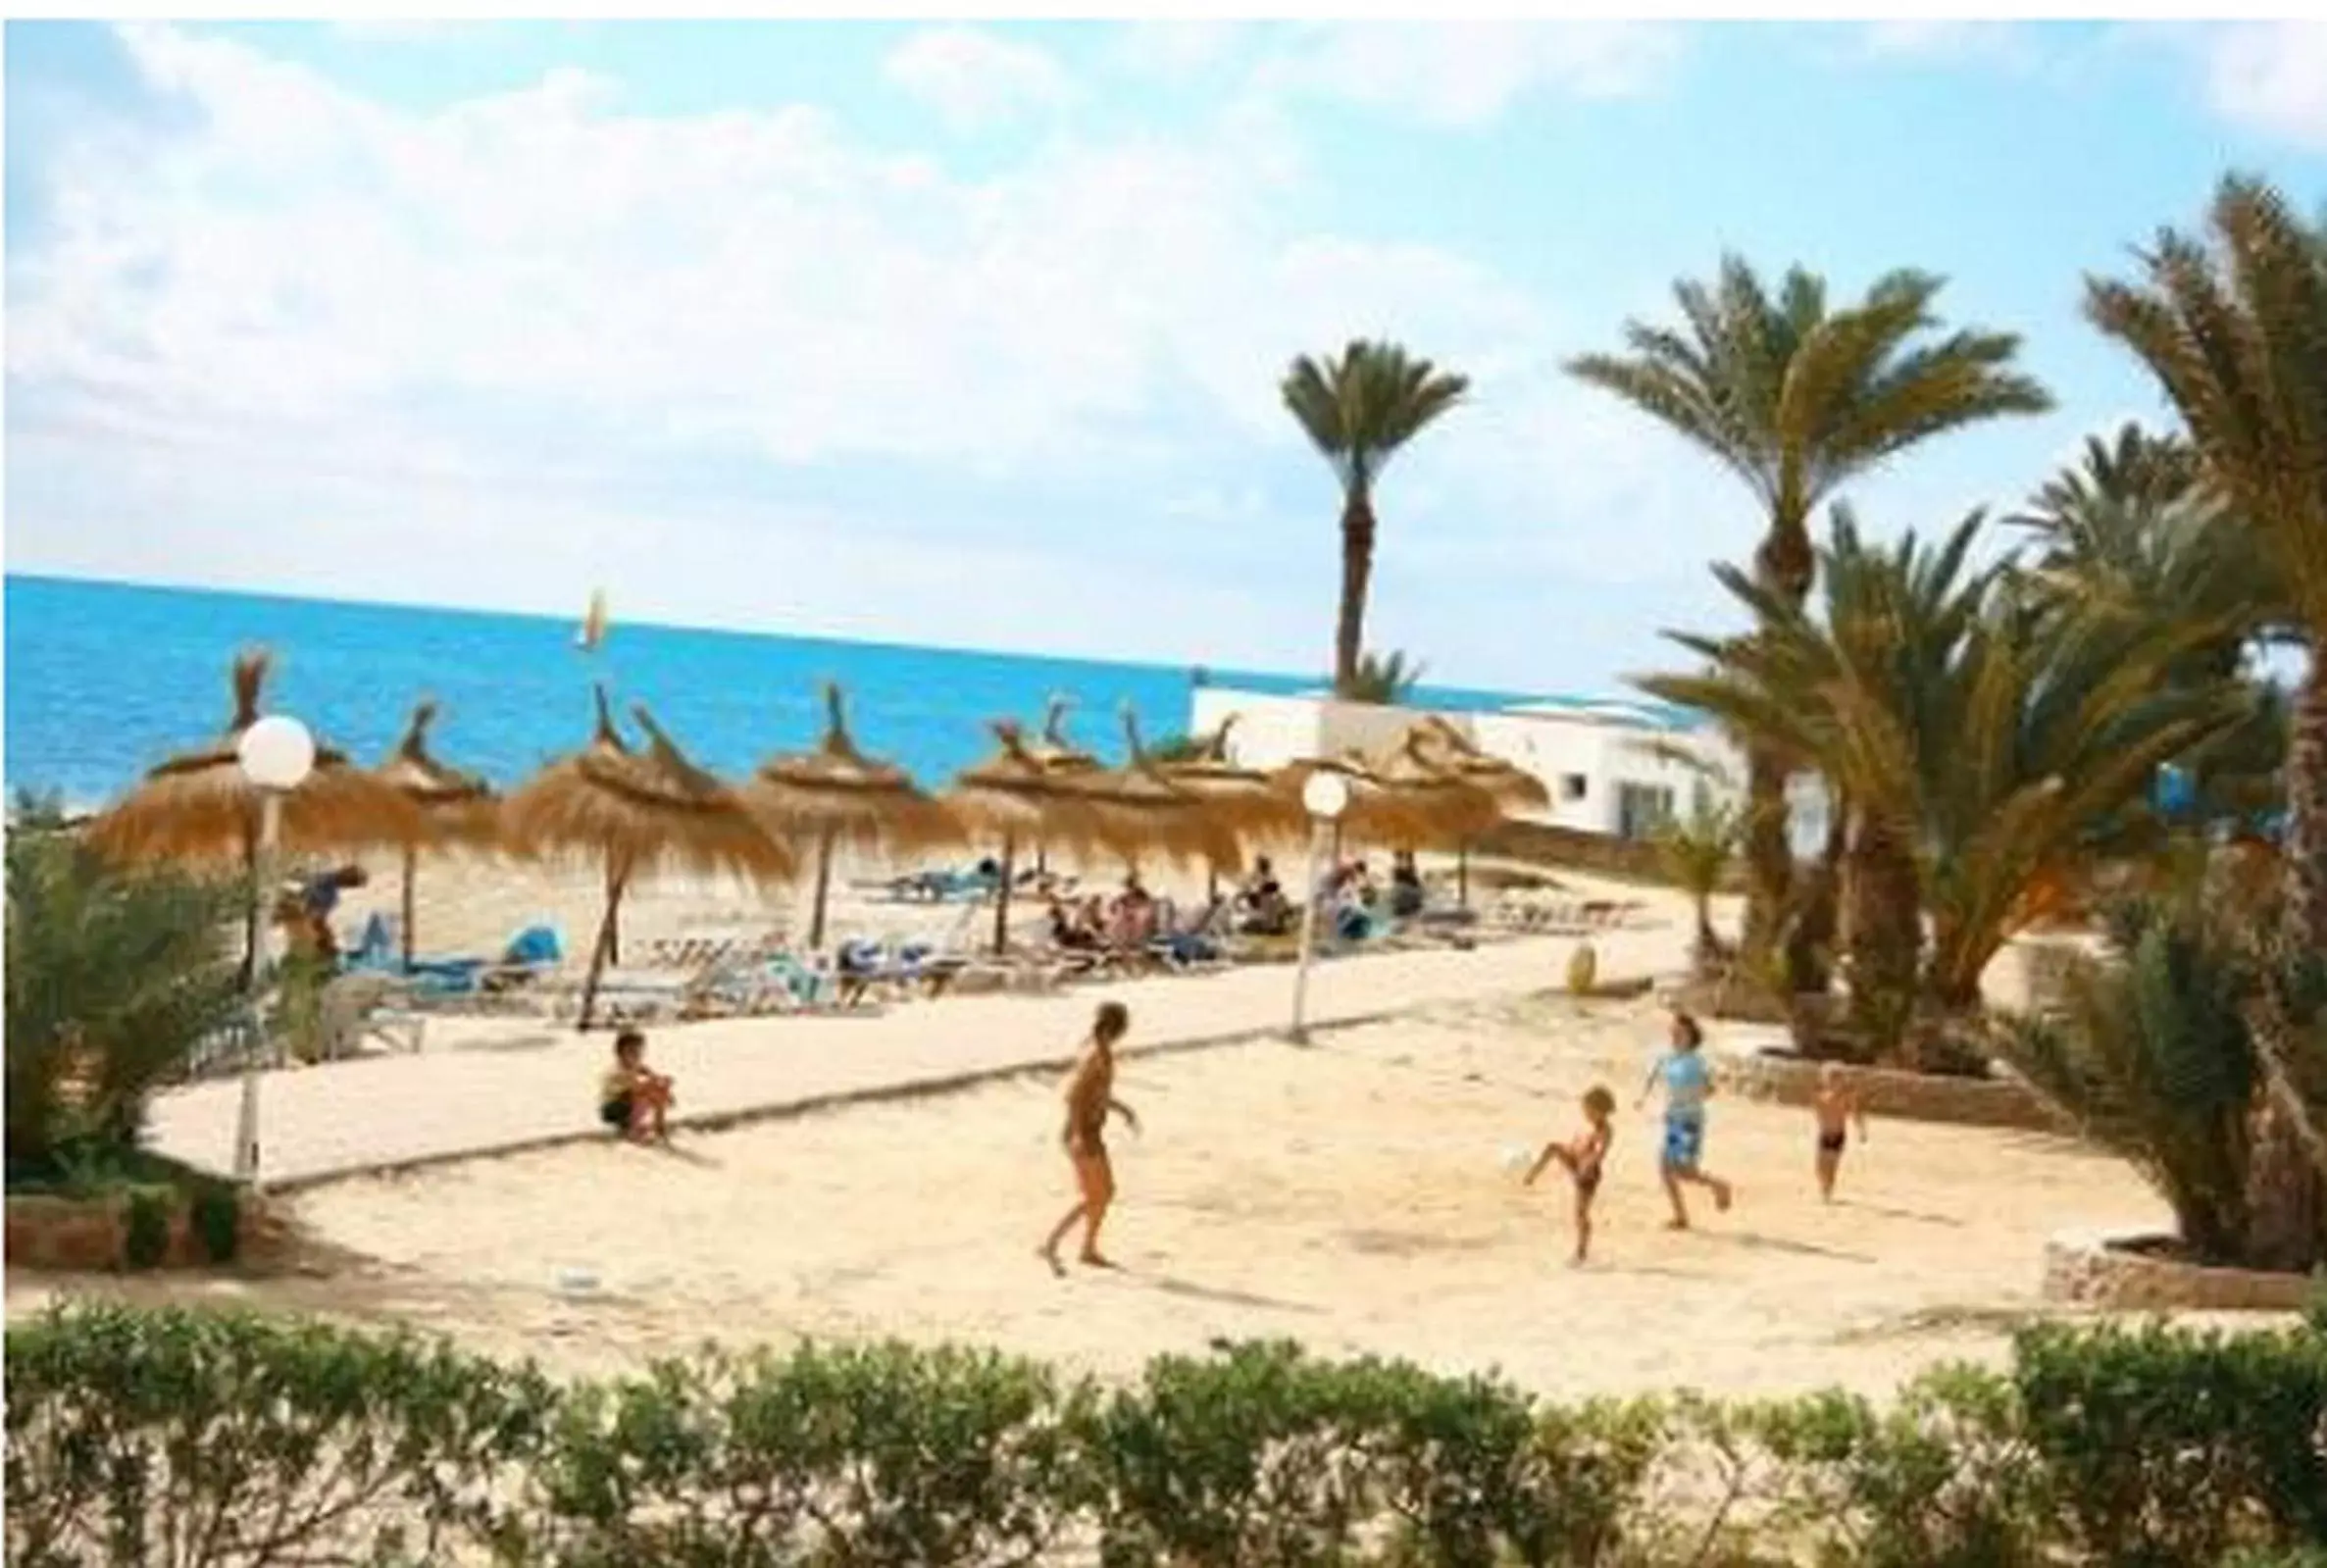 Children play ground, Beach in El Mouradi Djerba Menzel